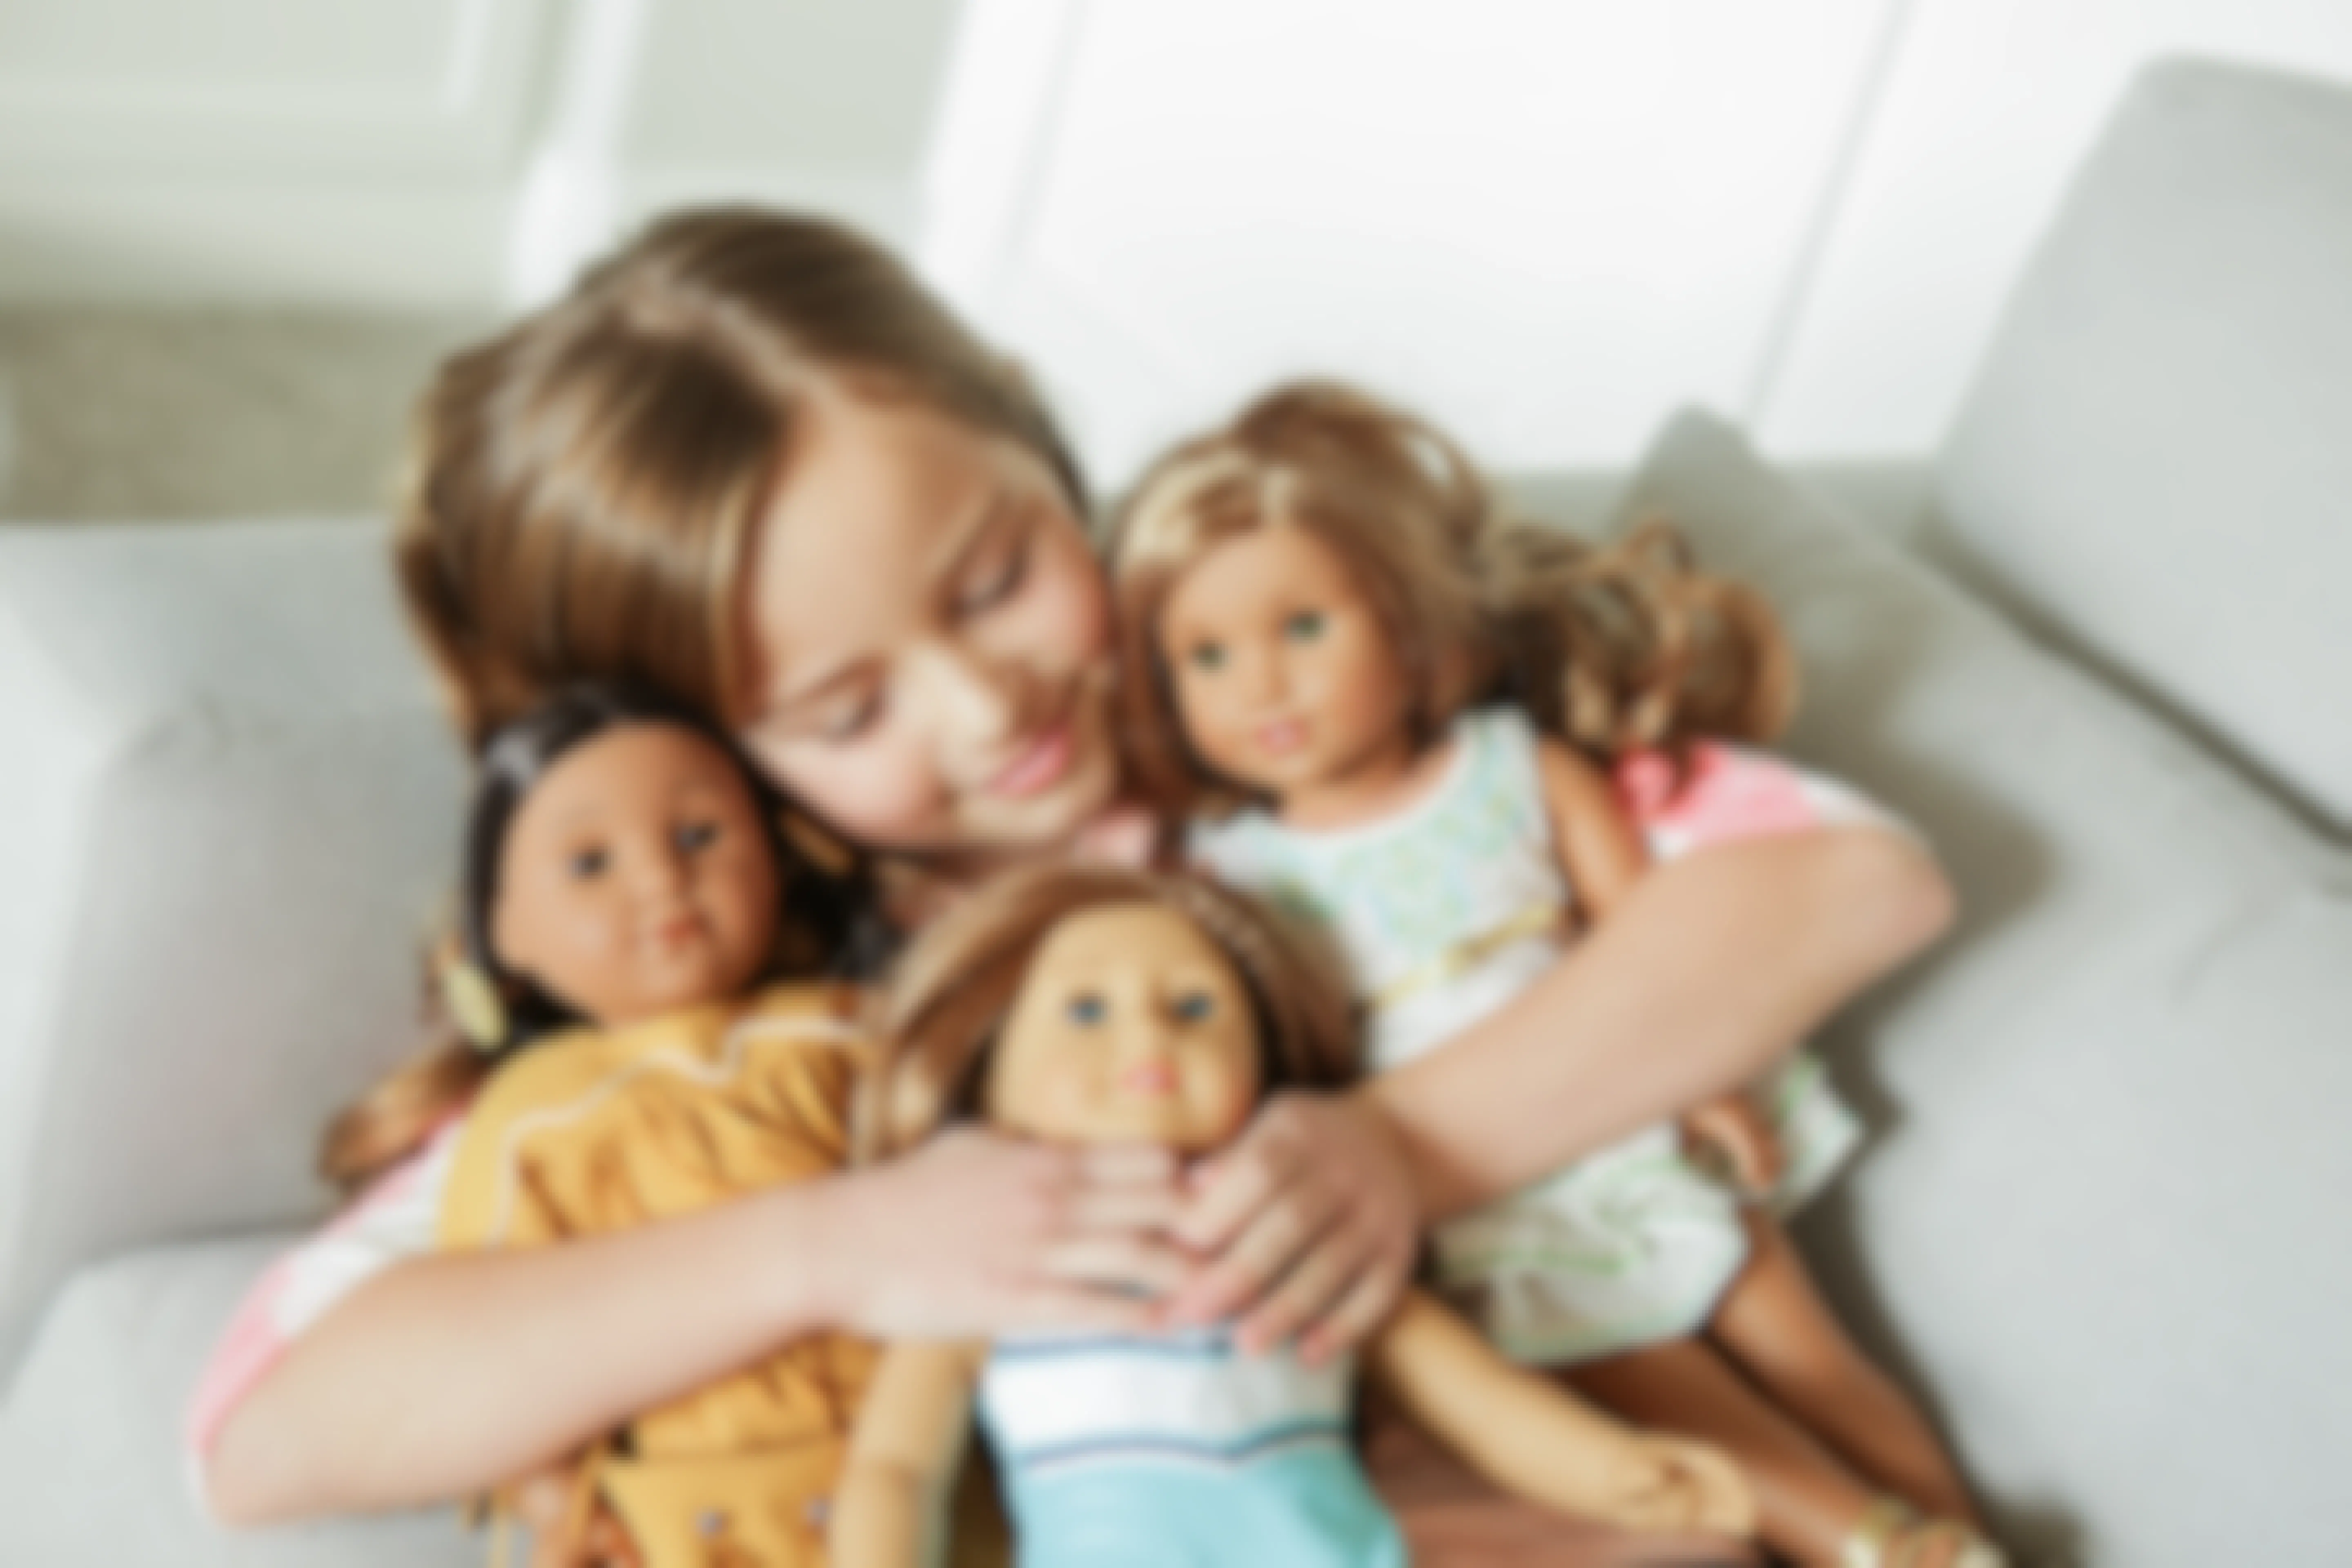 A girl cuddles her American Girl dolls